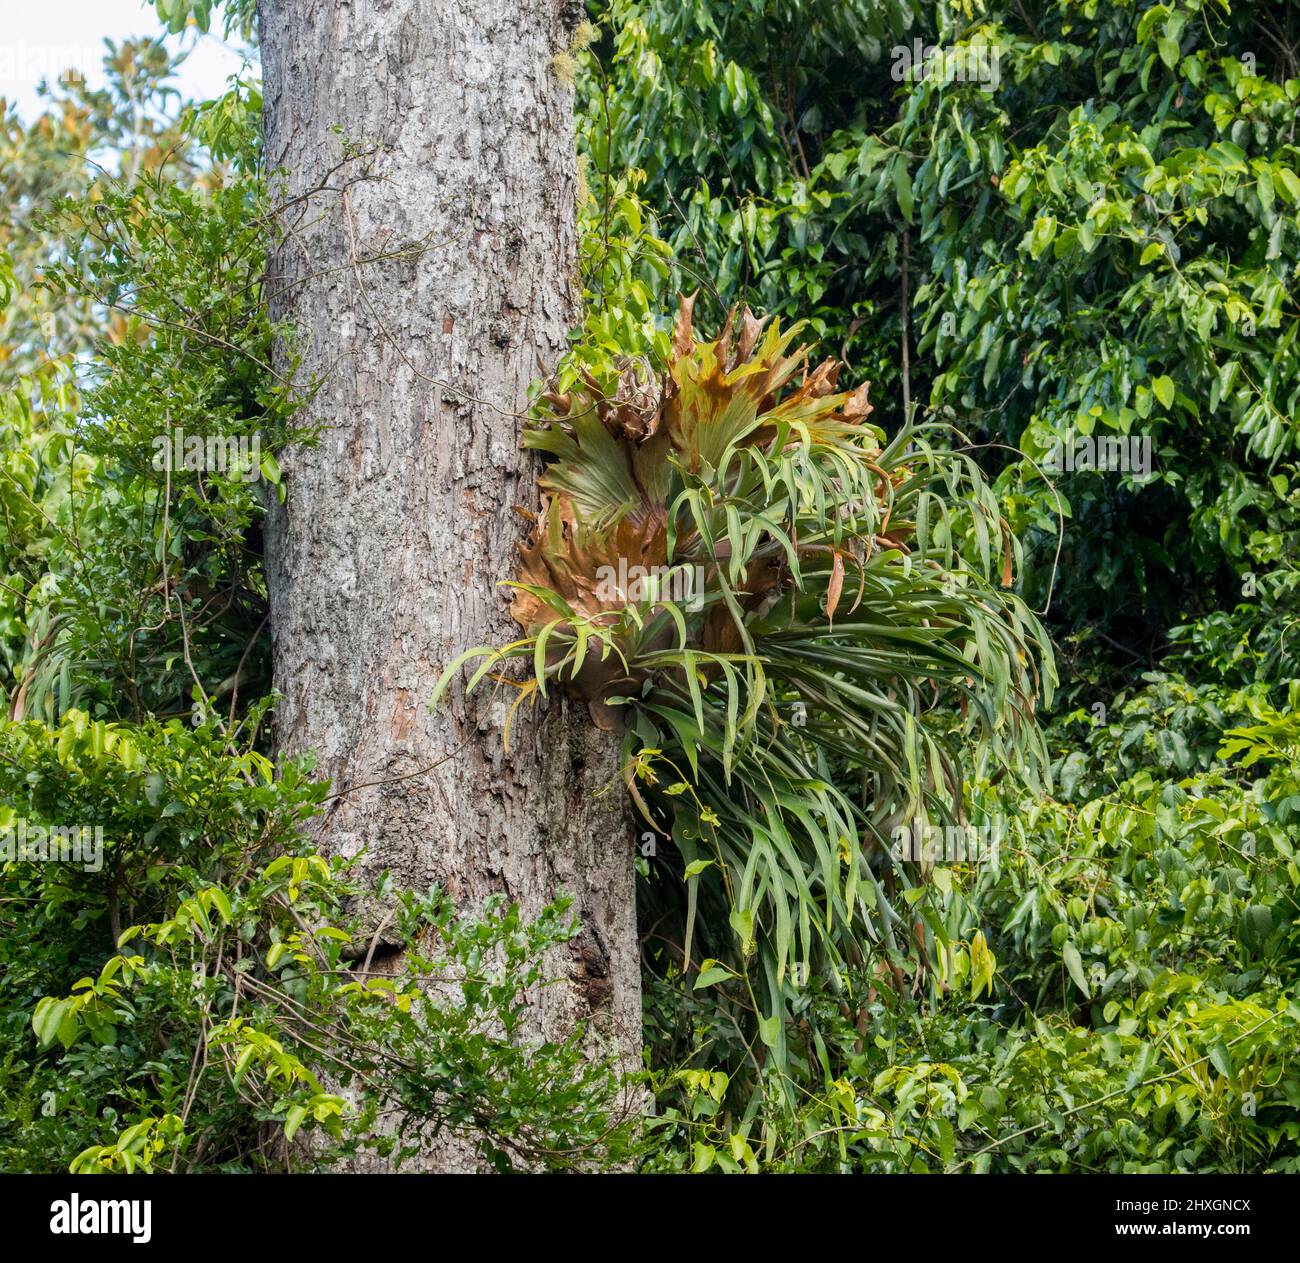 Elkhorn fern, Platycerium bifurcatum, an Australian native plant, growing on a tree trunk in a forest in Australia Stock Photo